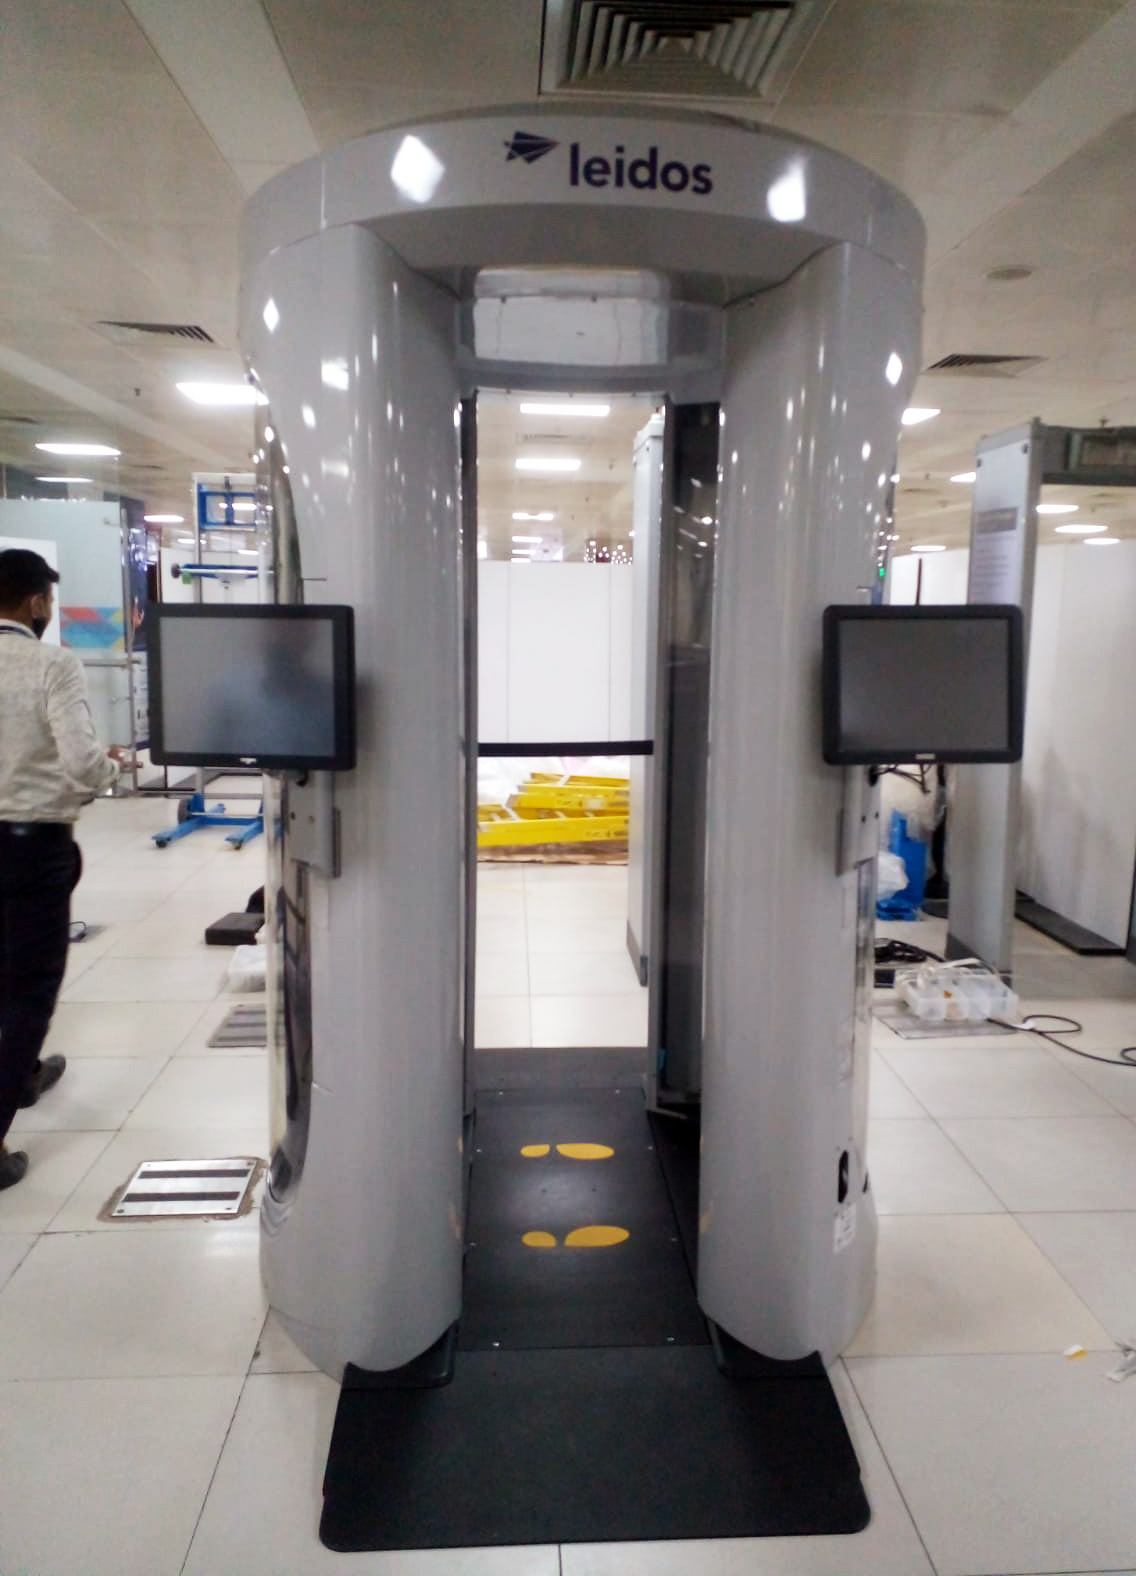 https://sundayguardianlive.com/wp-content/uploads/2022/09/Full-body-scanner-trial-stopped-at-Delhi-airport.jpg